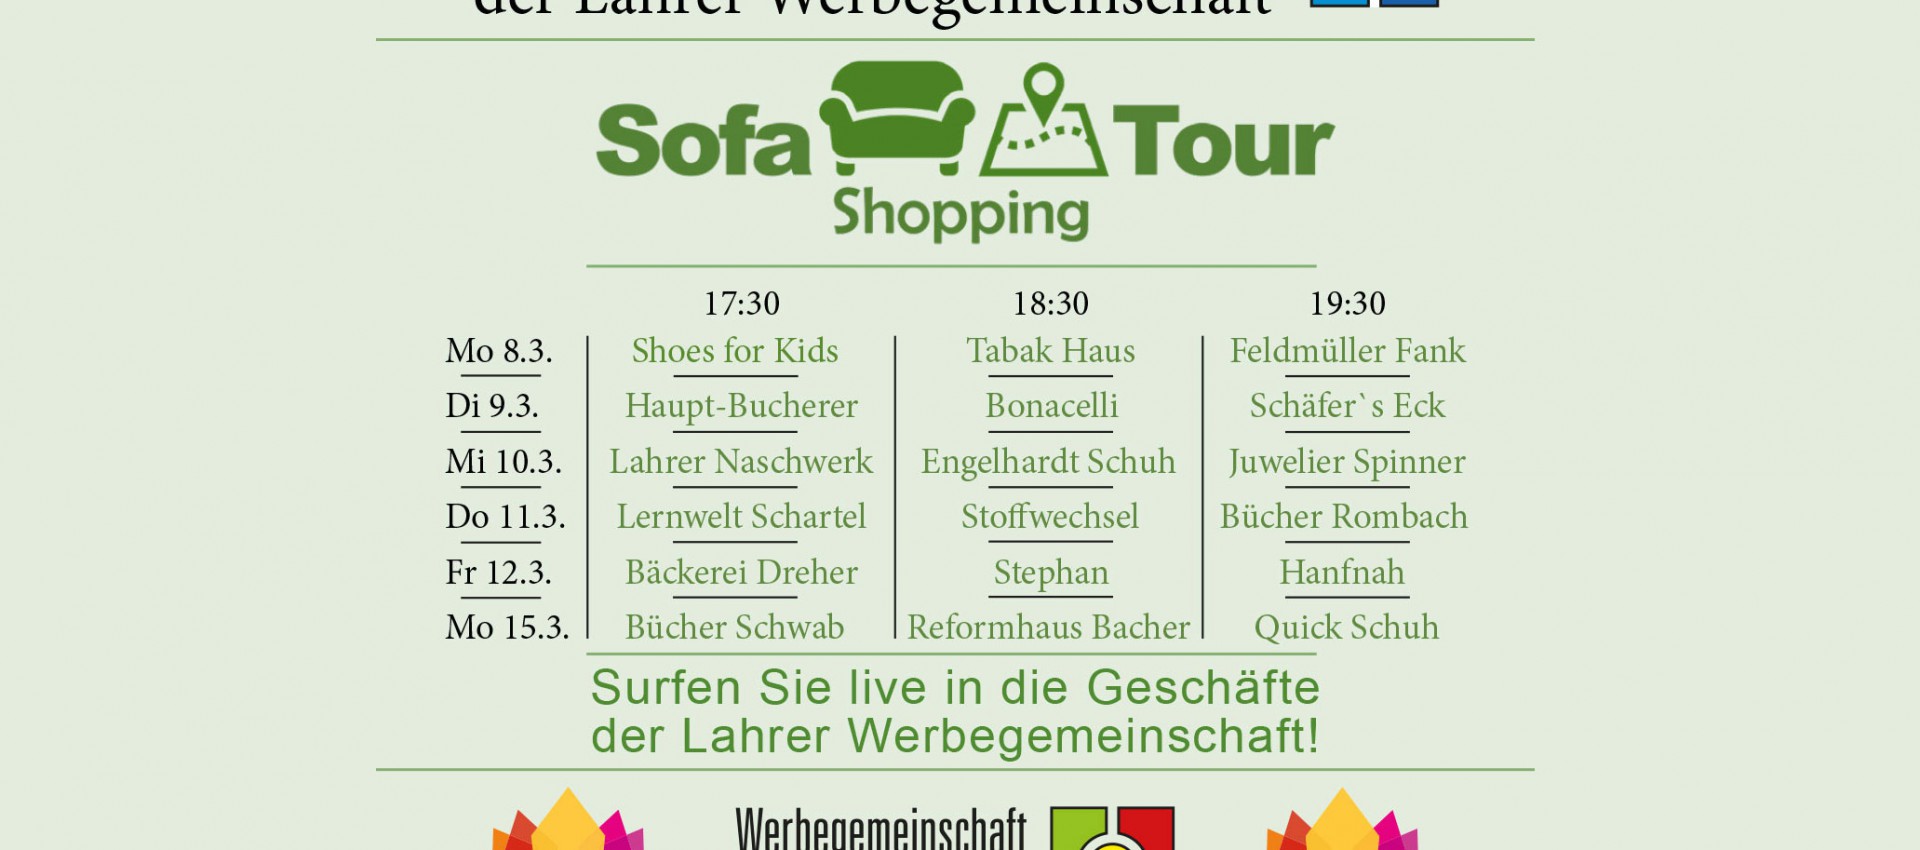 Sofa Shopping Tour in Lahr